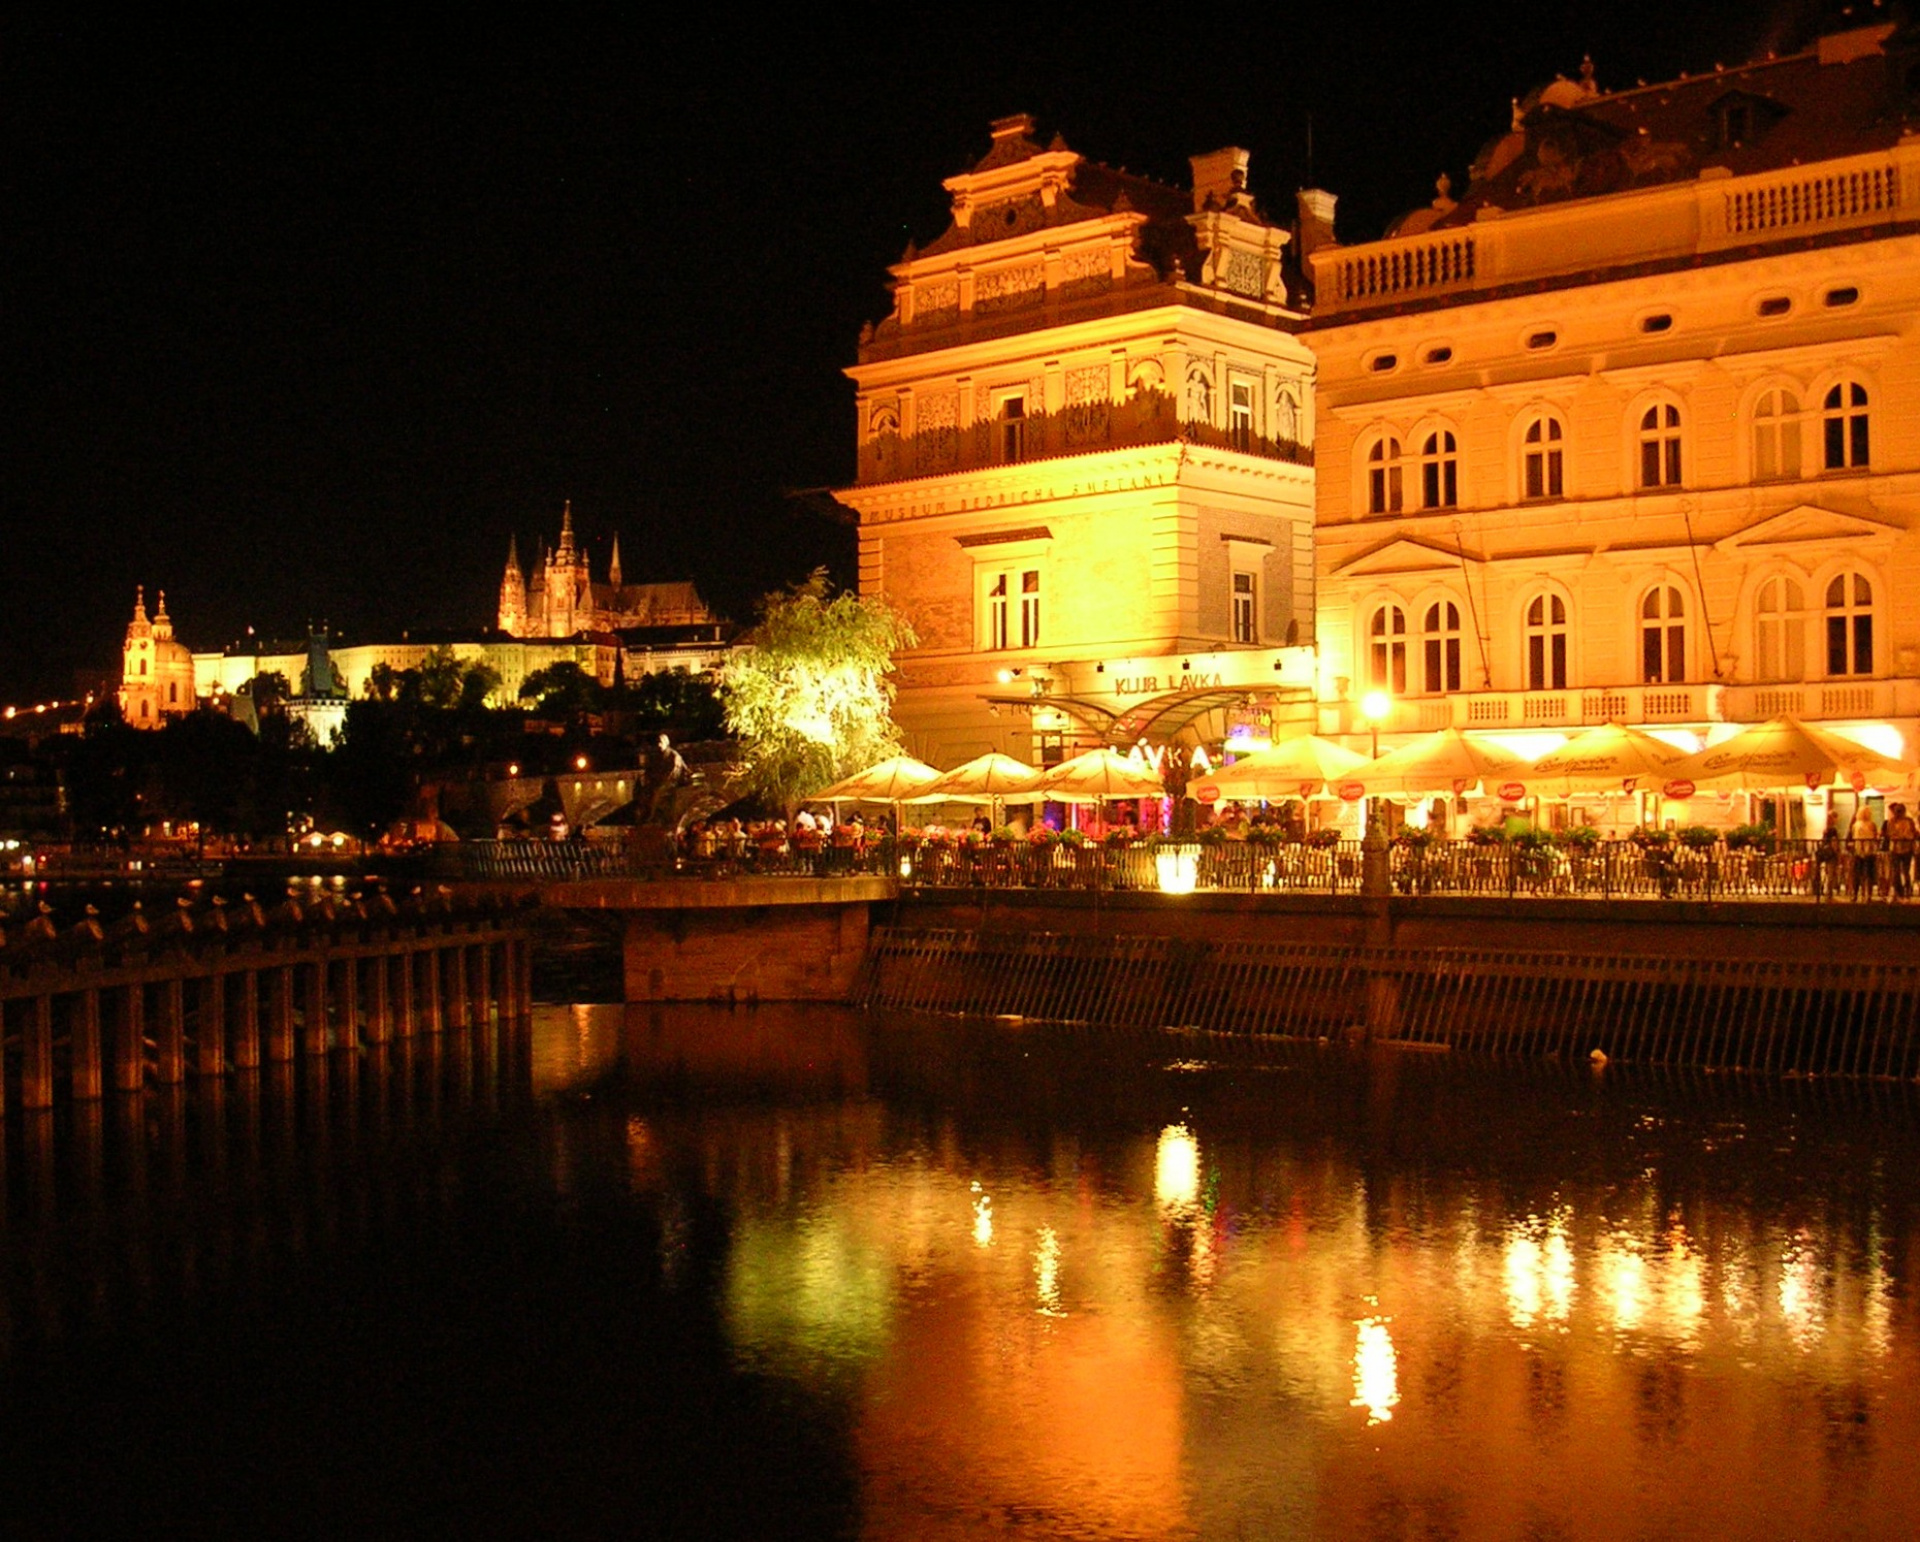 <font size="+2" color=" #FFD733" <b="">Jedinečné místo v srdci Prahy.<br>Unique place in the heart of Prague. <br></font><b><br>
</b>